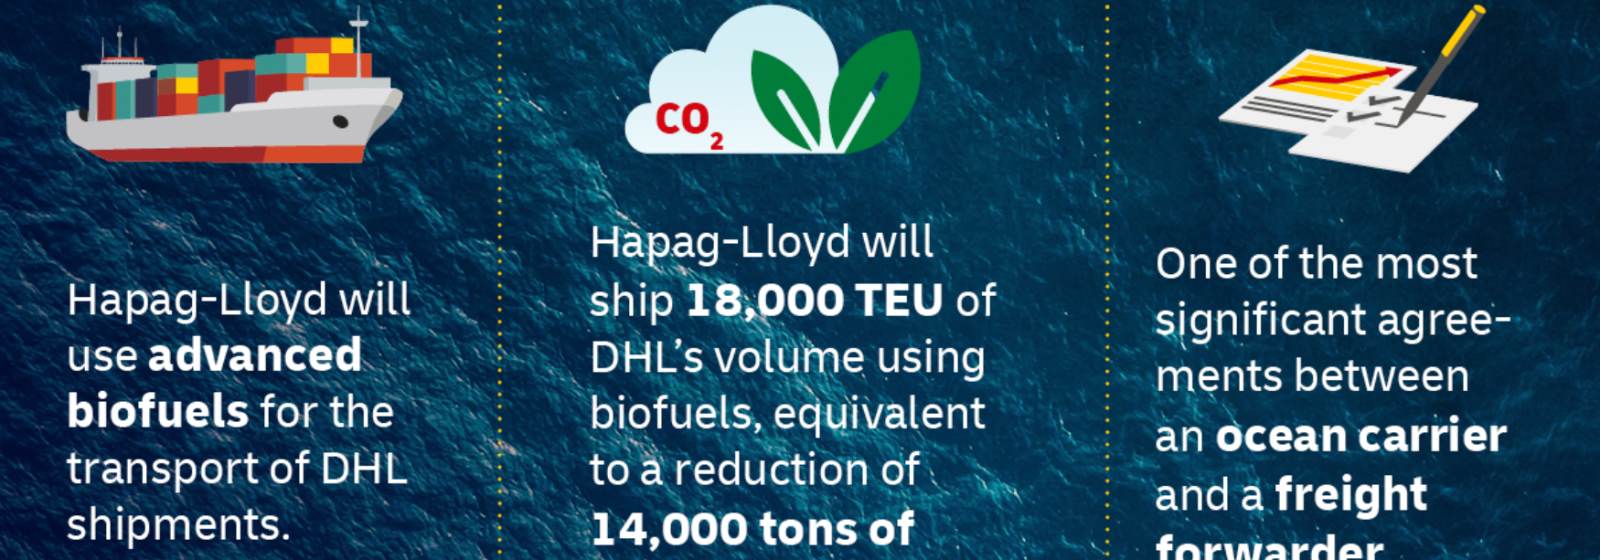 2022 Hapag-Lloyd DHL biofuel